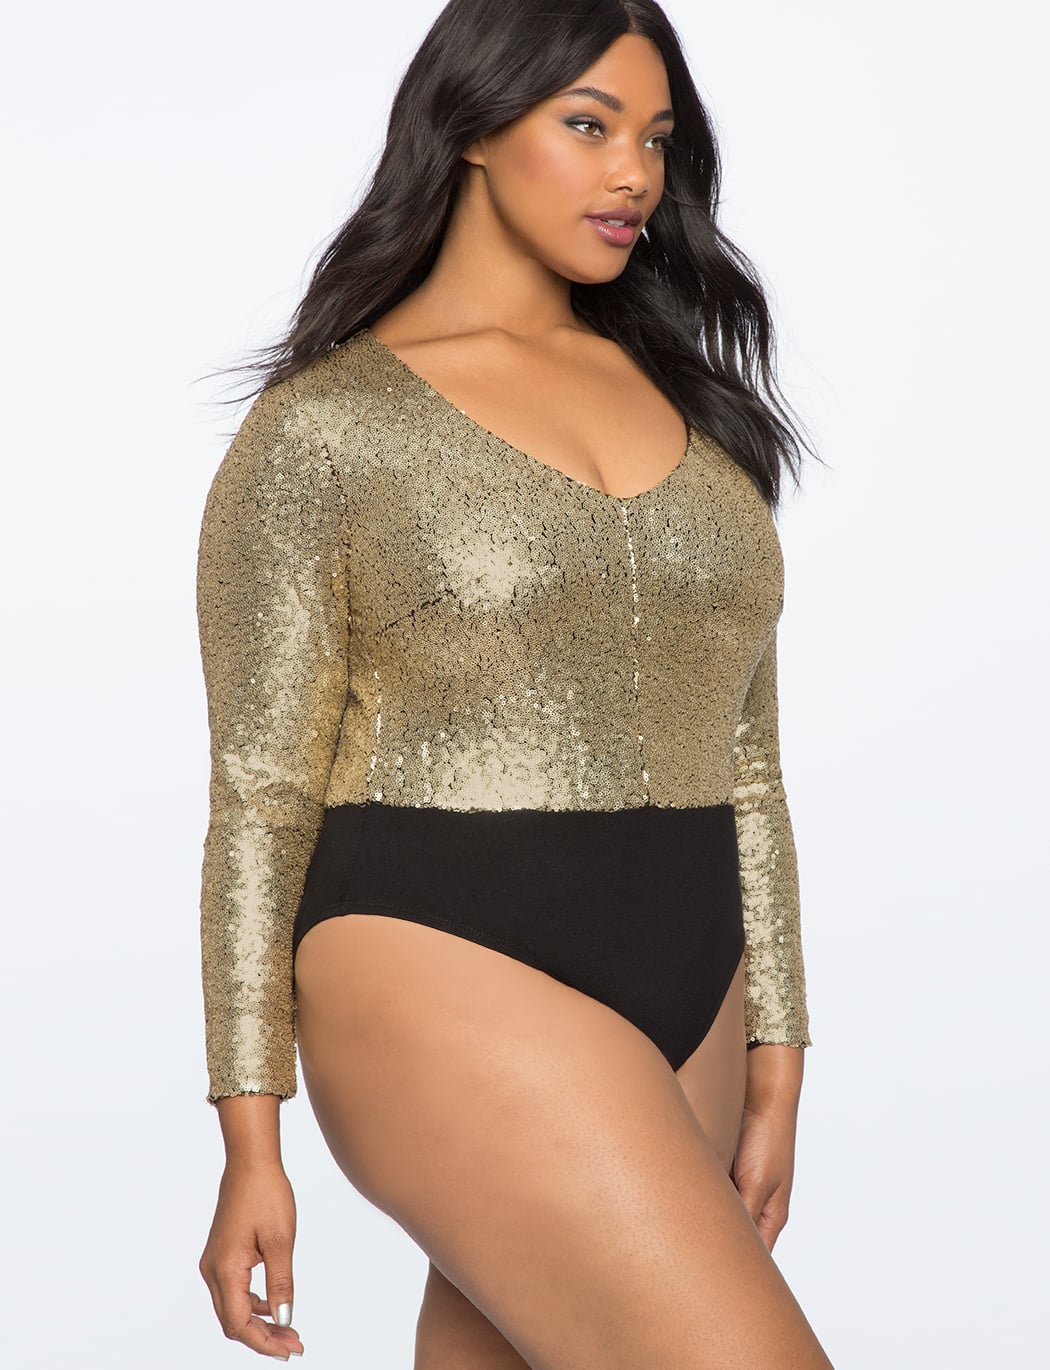 Gold Shimmer Long Sleeved Bodysuit (Ladies S) - clothing